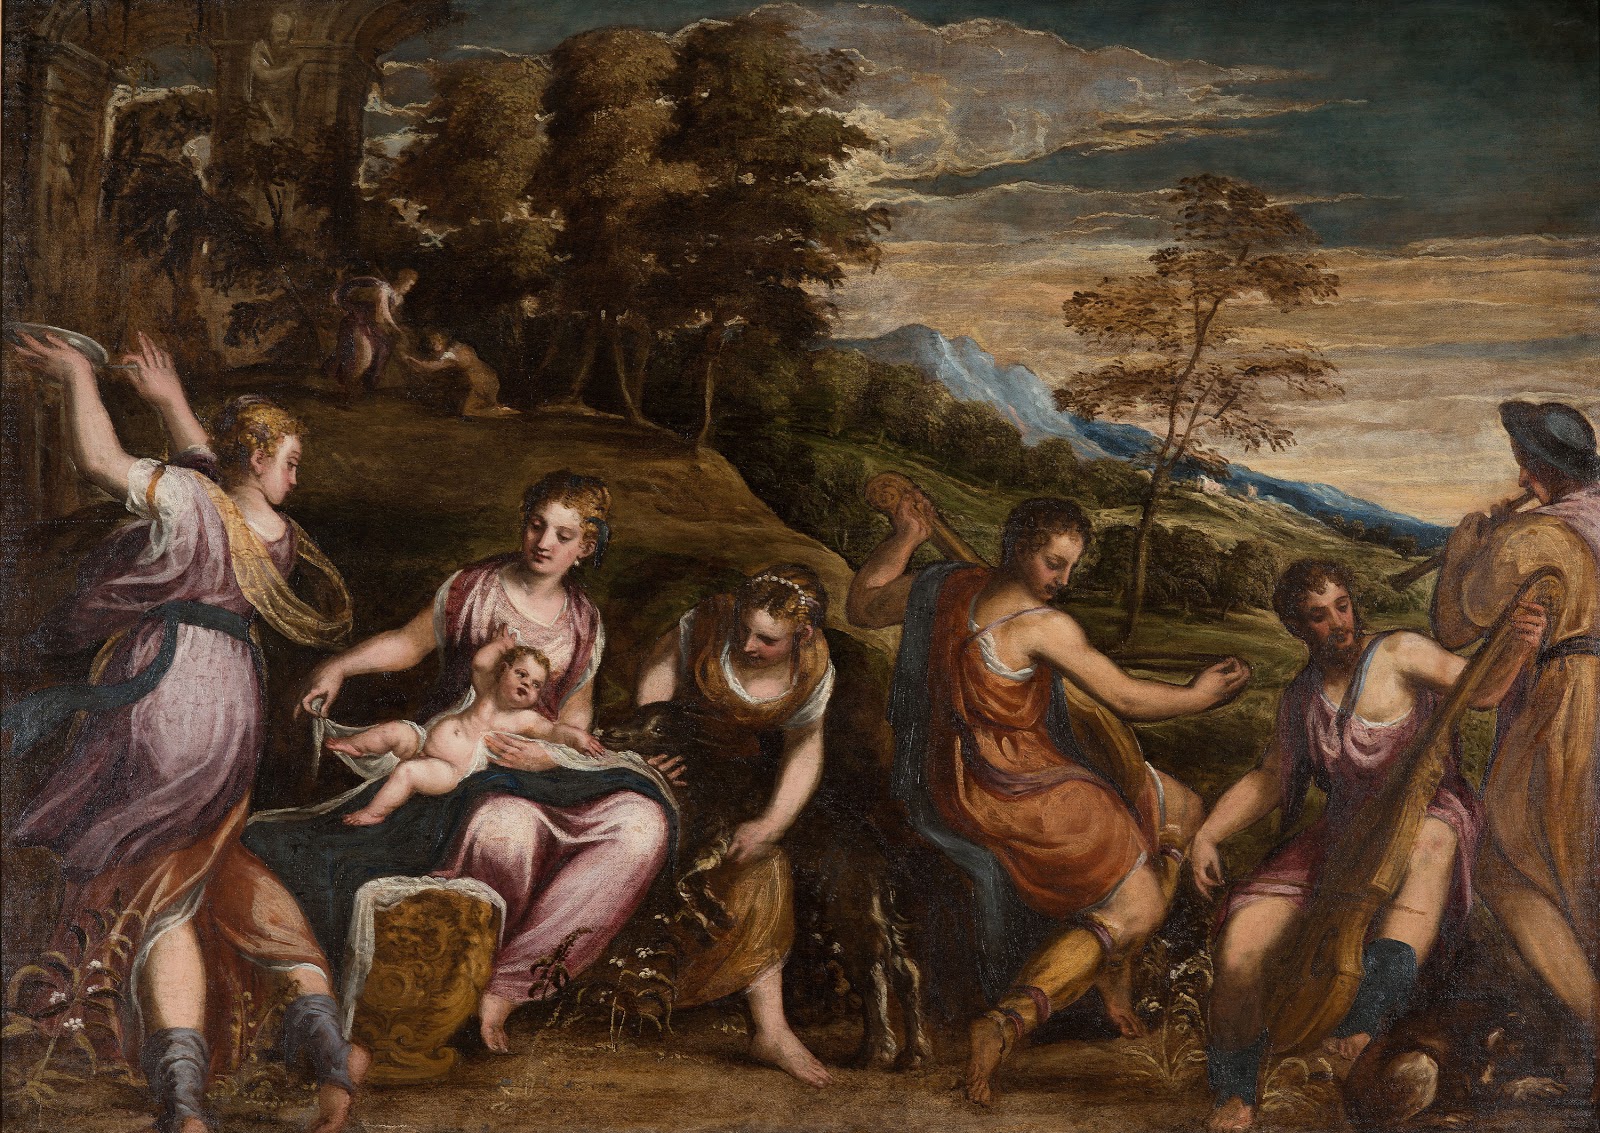 Andrea+Schiavone-1522-1563 (12).jpg